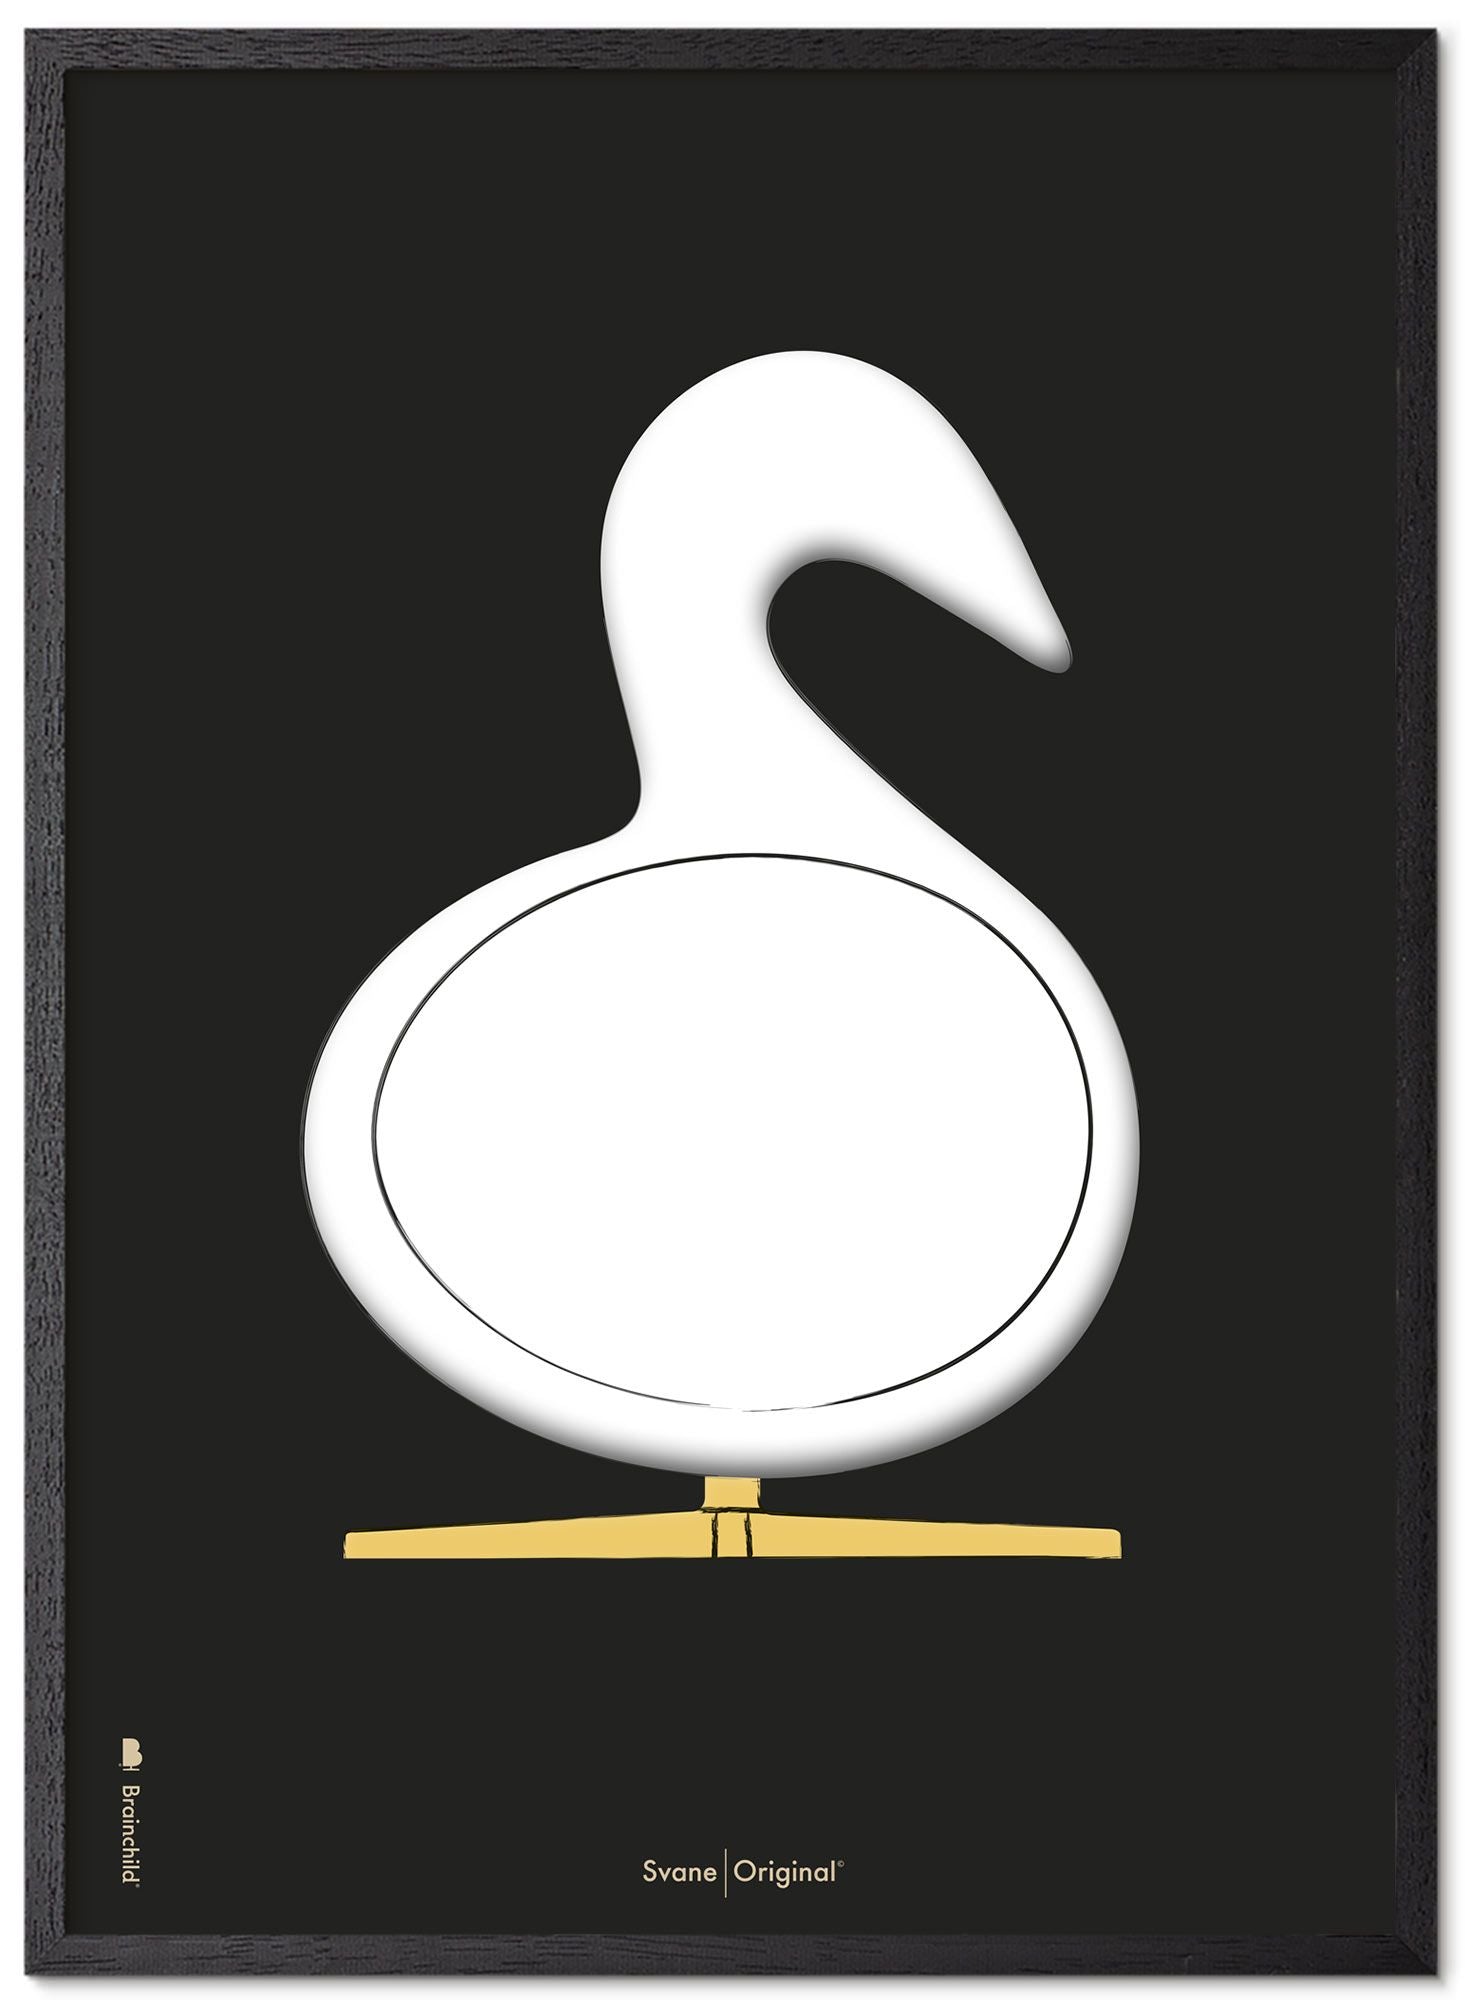 Brainchild Swan Design Sketch Poster Frame Made Of Black Lacquered Wood 70x100 Cm, Black Background